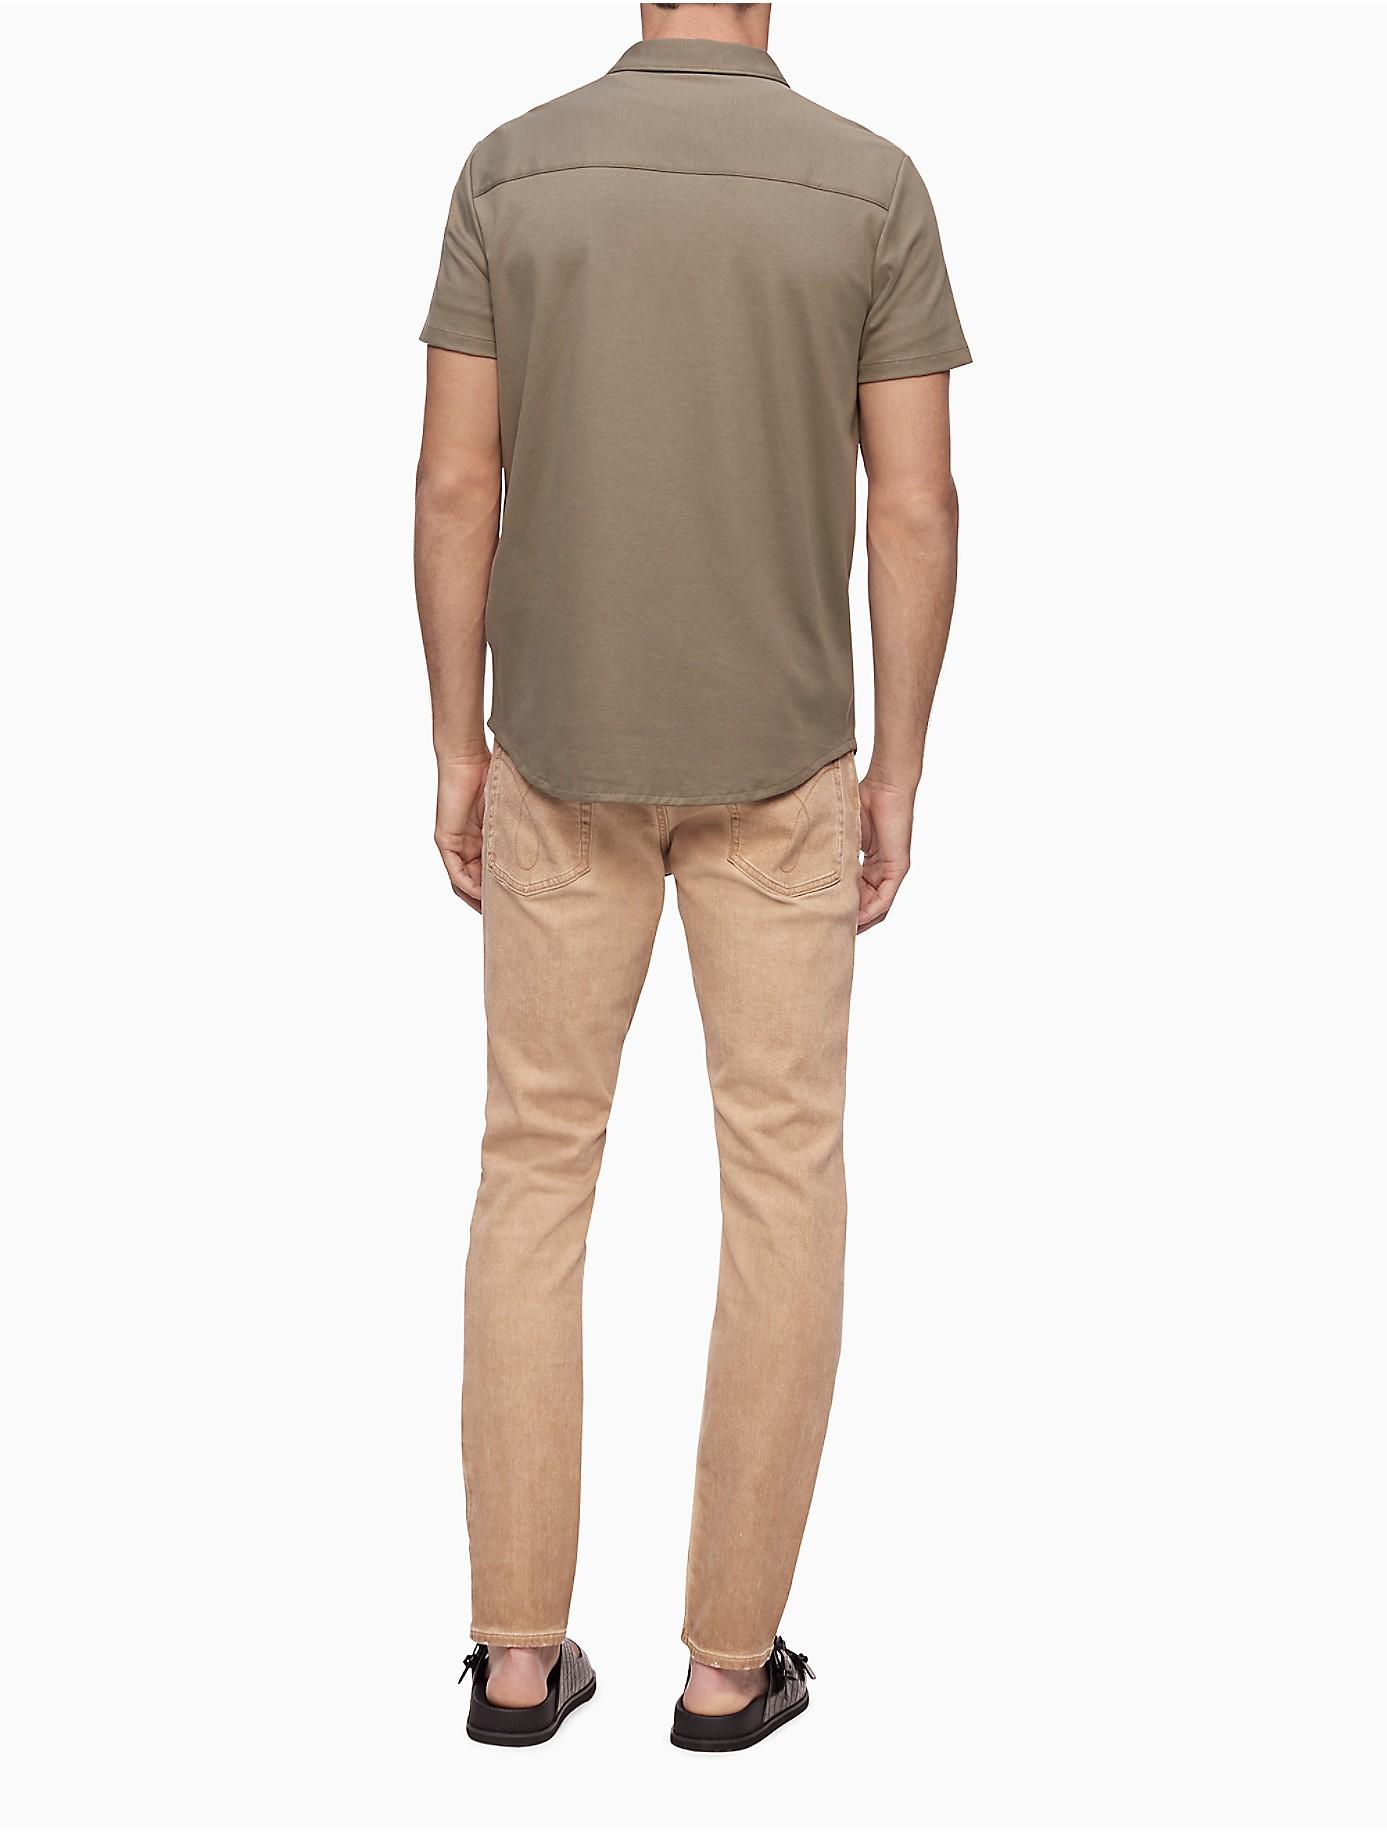 Calvin Klein Short Sleeve Liquid Touch Polo Button Down Shirt for Men